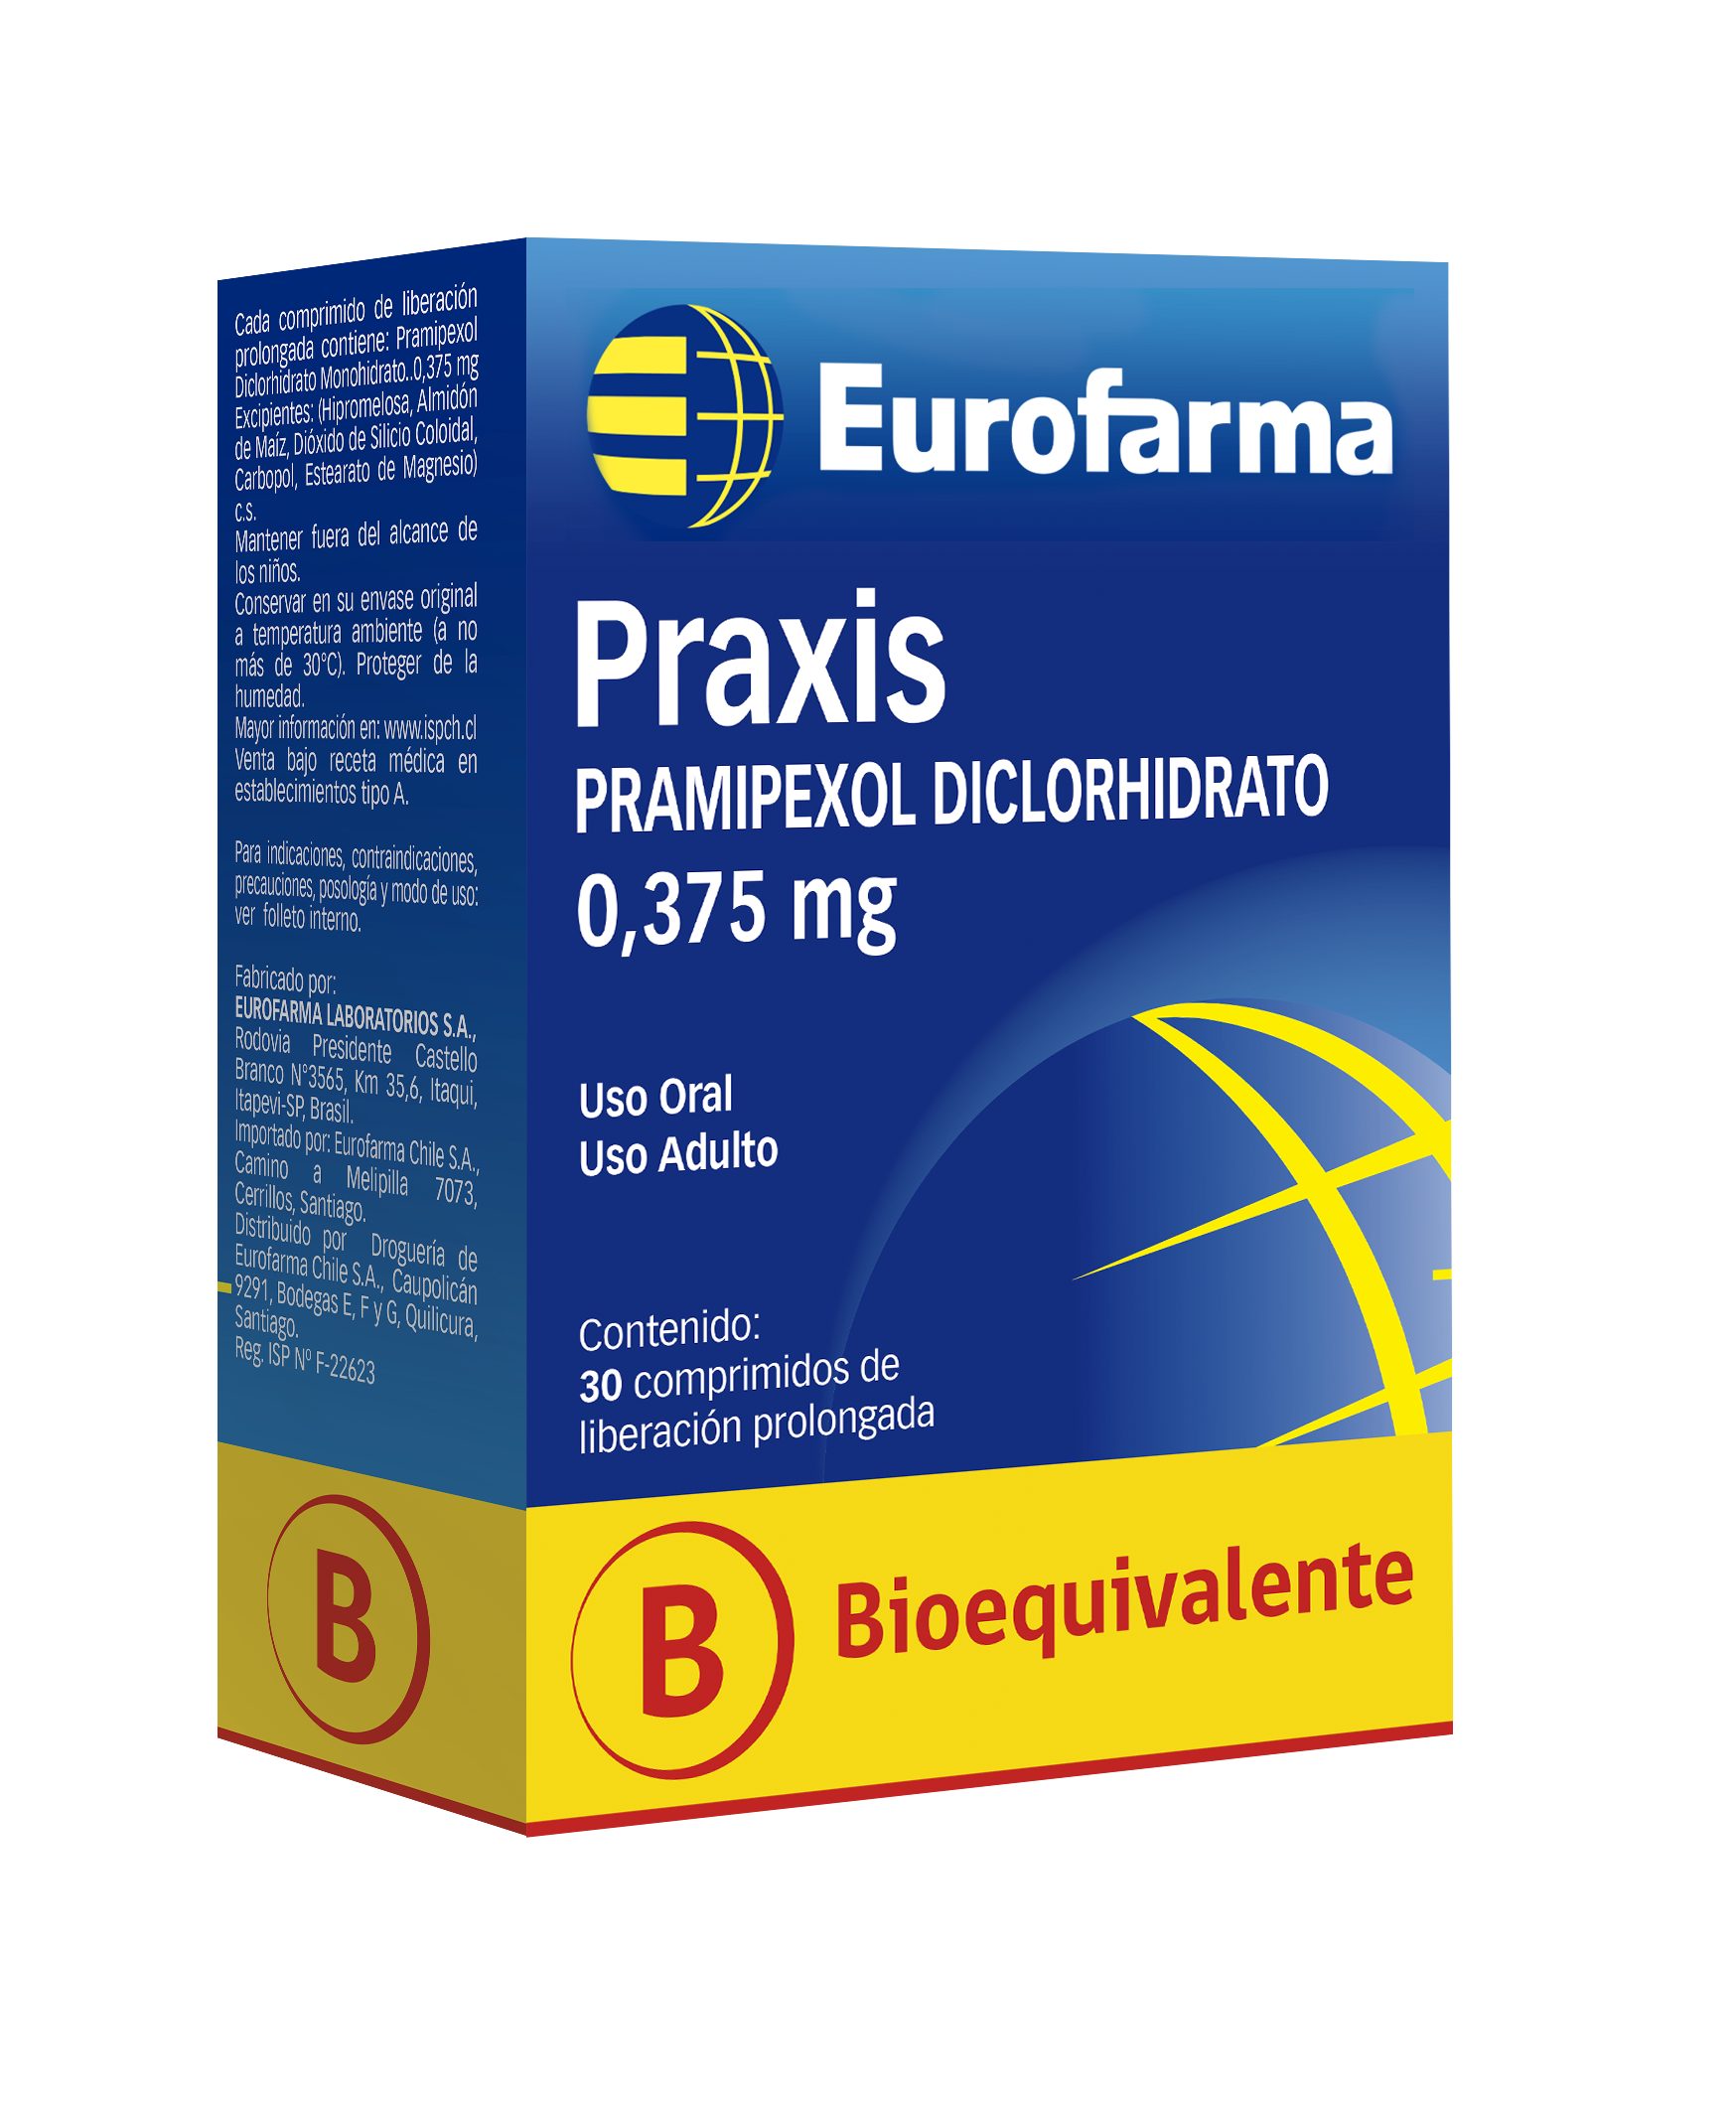 Praxis 0,375 mg. (Diclorhidrato de Pramipexol Monohidrato) bioequivalente